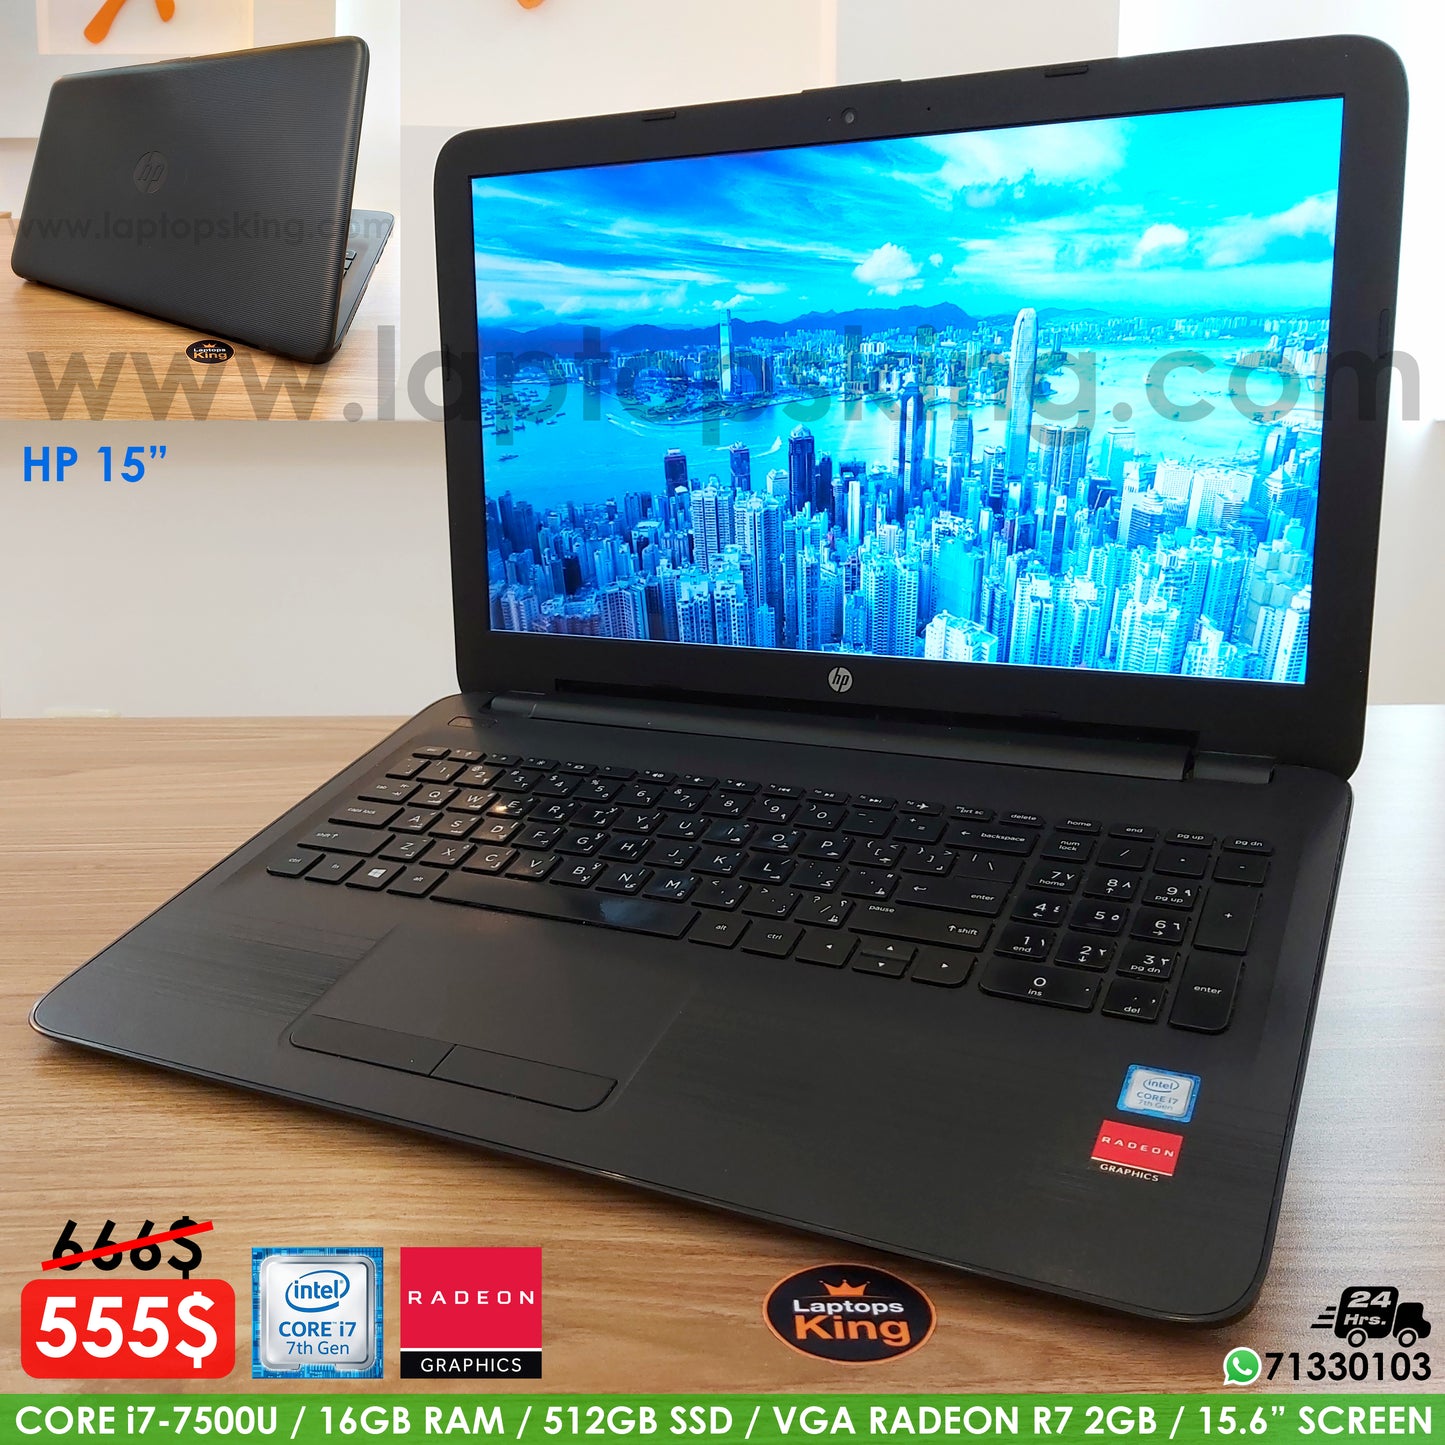 Hp 15" i7-7500U Vga R7 2gb Laptop (Used Very Clean)